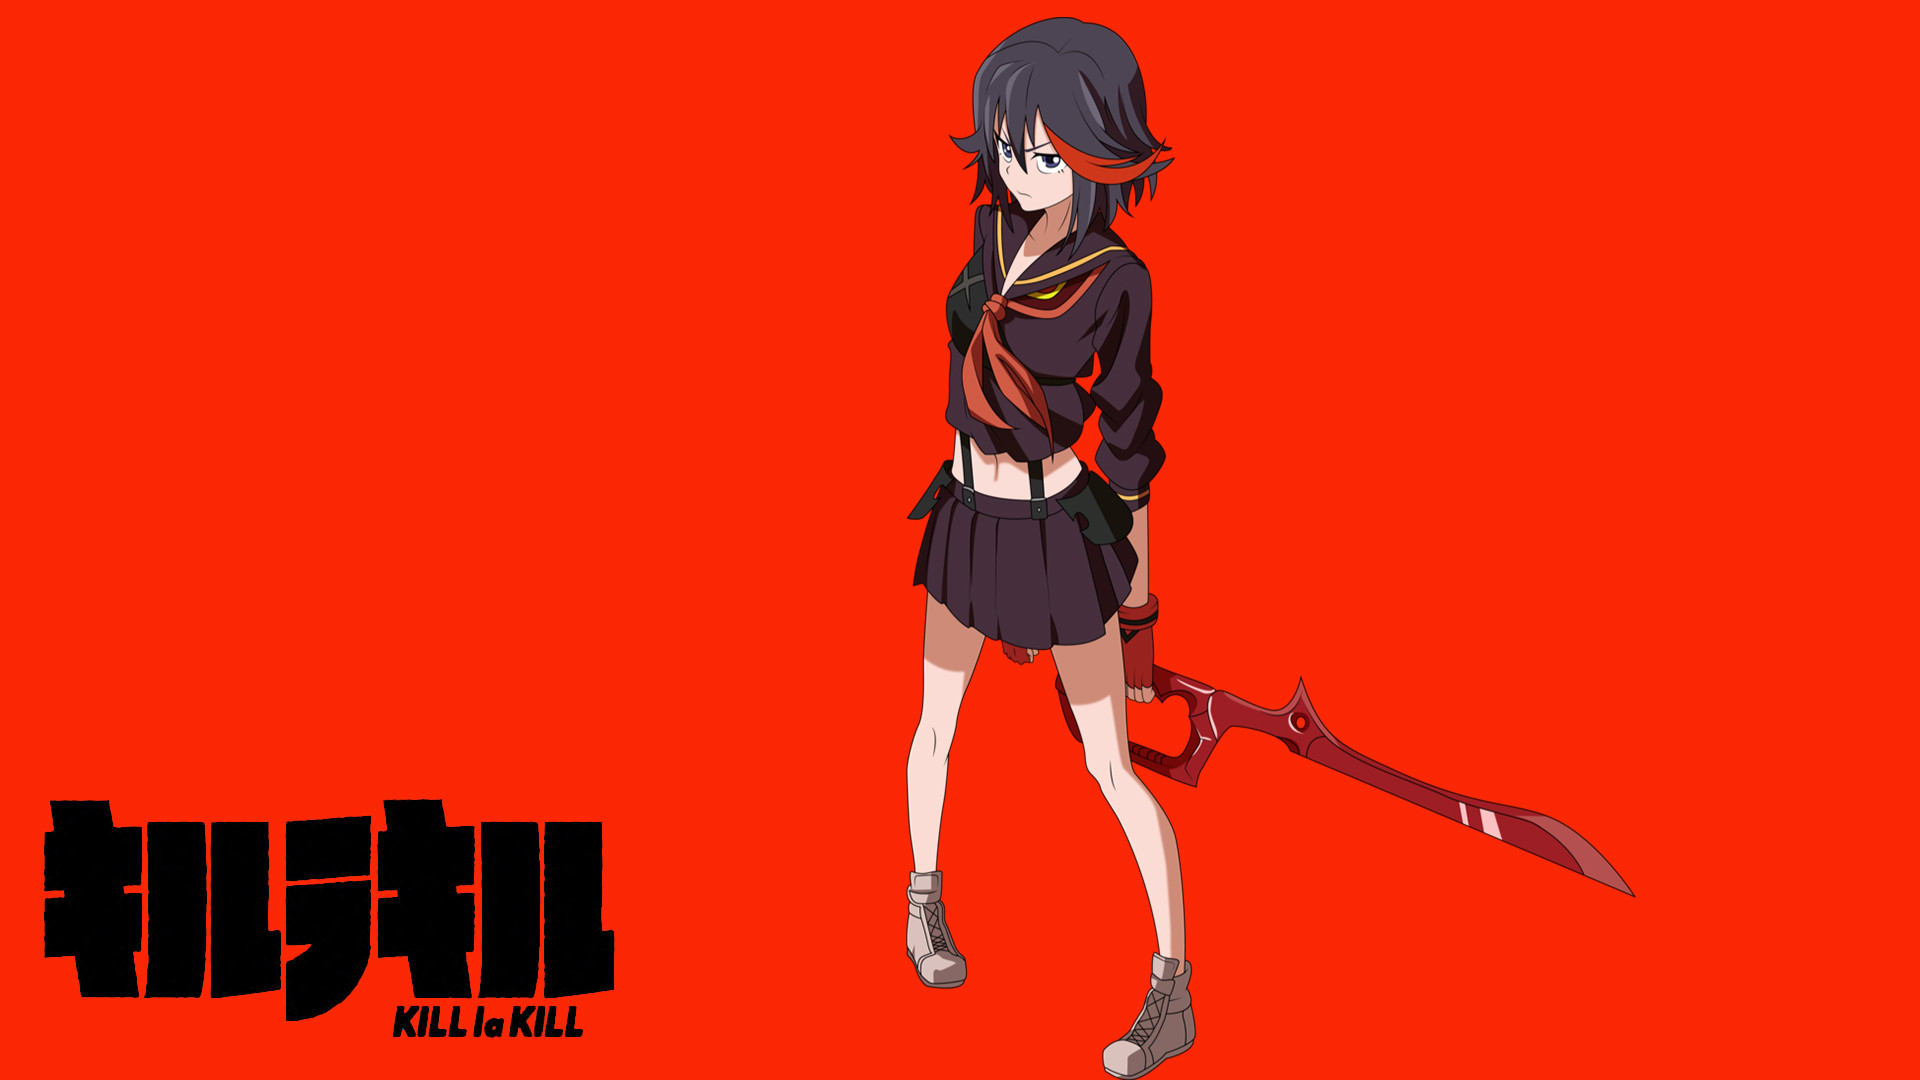 Ryuuko From Kill La Kill [1920x1080] Anime Wallpaper Wallpapers 1920x1080